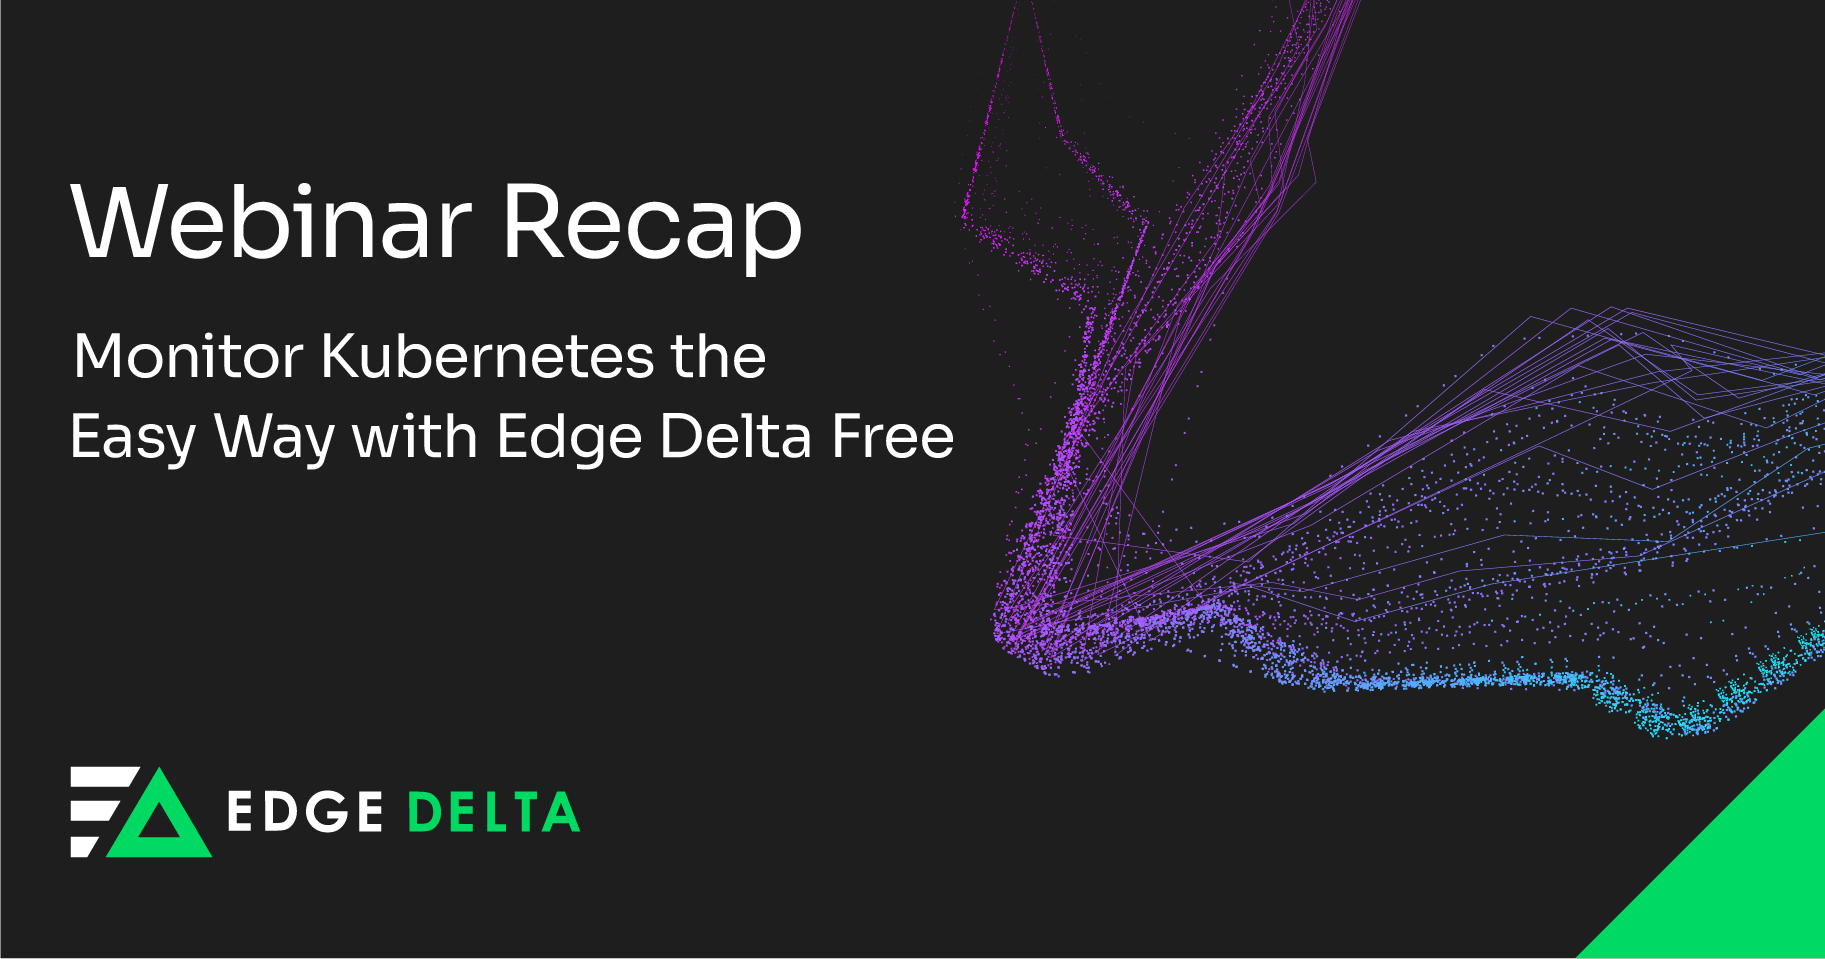 Webinar Recap: Monitor Kubernetes the Easy Way with Edge Delta Free